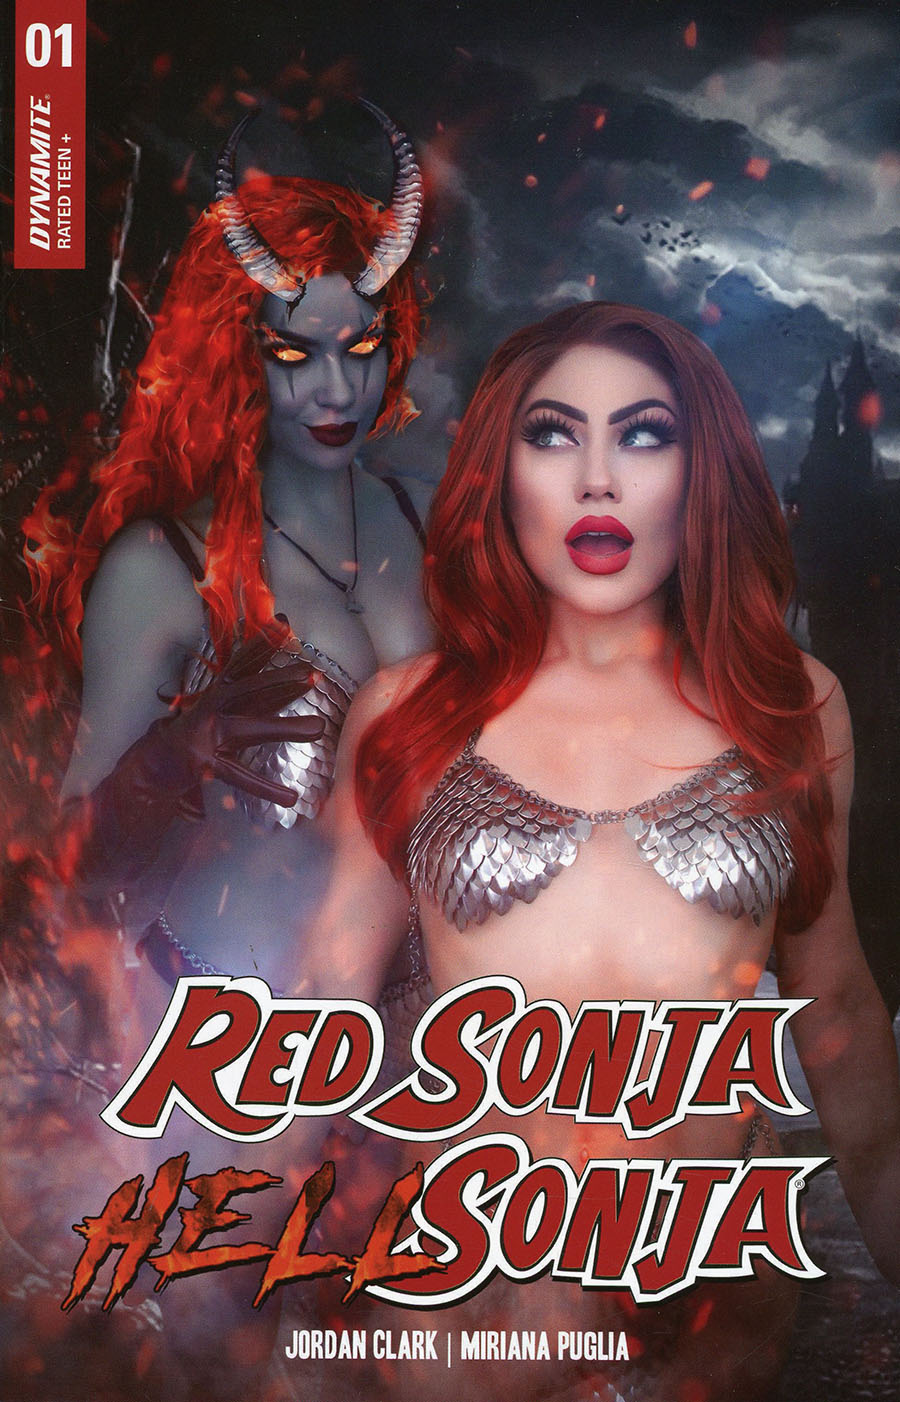 Red Sonja Hell Sonja #1 Cover E Variant Rachel Hollon Cosplay Photo Cover